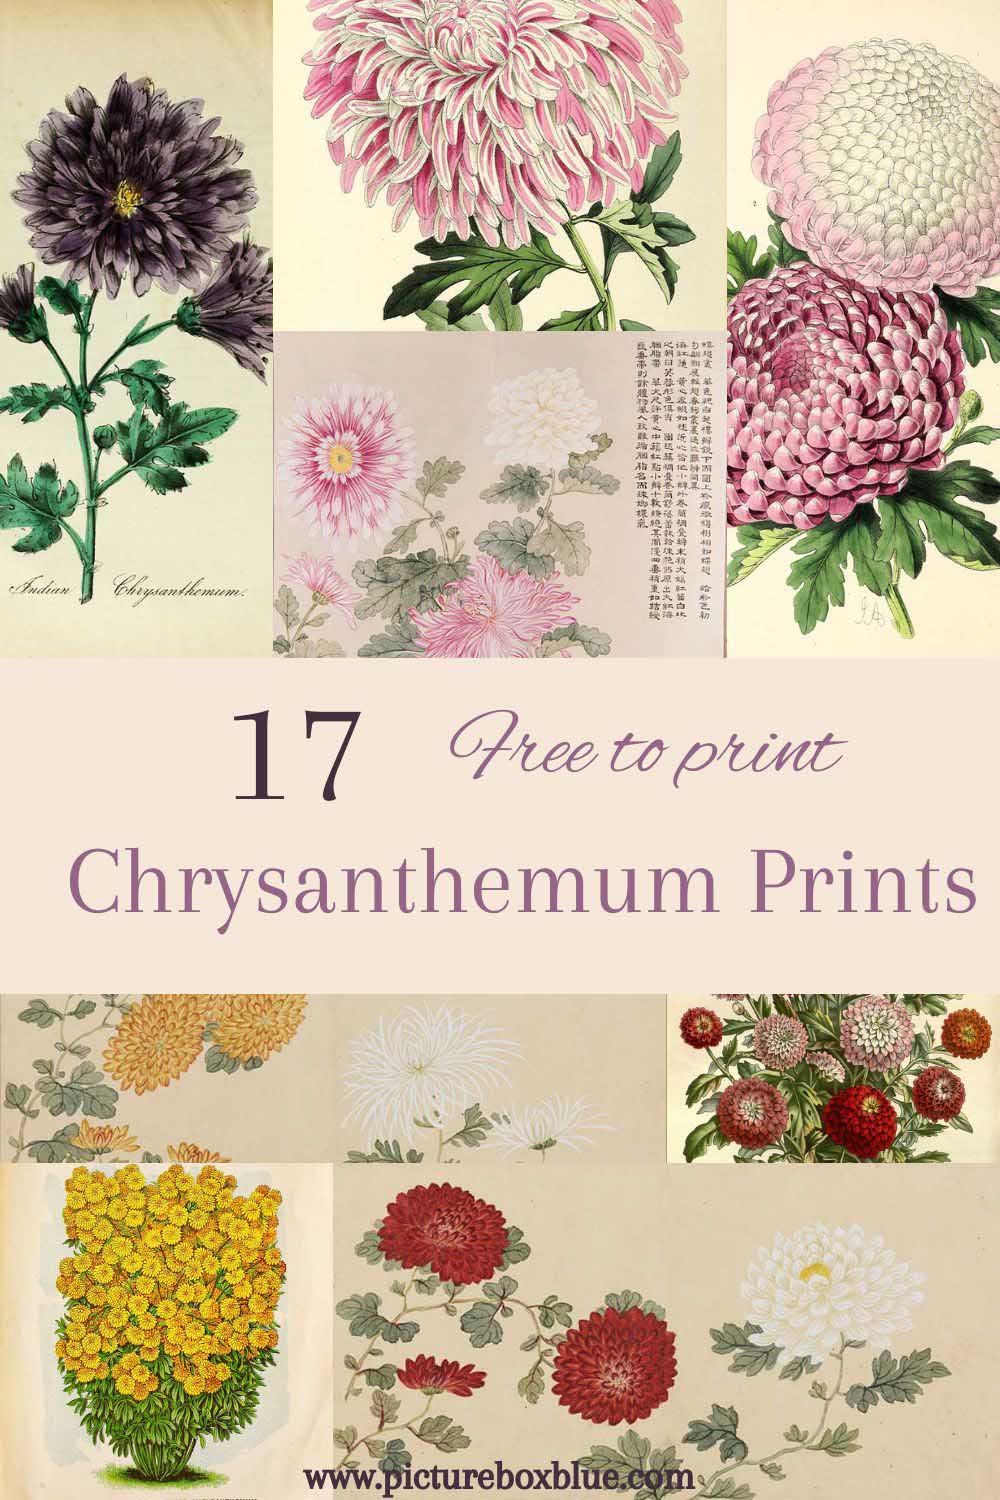 Chrysanthemum botanical illustrations and art prints